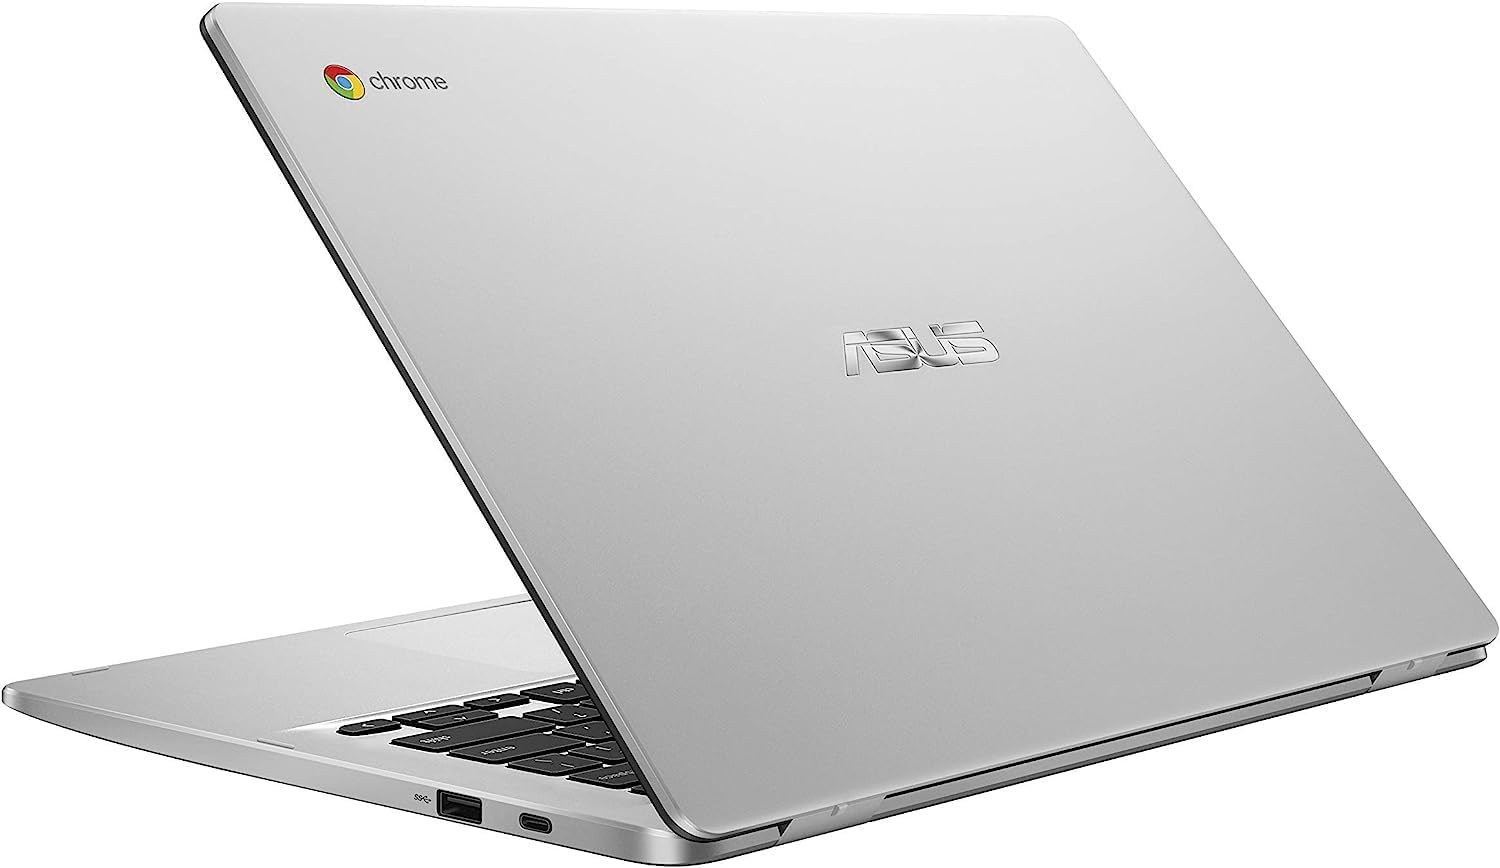 Asus C523NA Chromebook 15.6 HD Laptop, Intel Celeron N3350 Processor, 4GB RAM, 64GB eMMC Flash Memory, Intel HD Graphics, HD Webcam, Stereo Speakers, Chrome OS, Silver, (renewed)